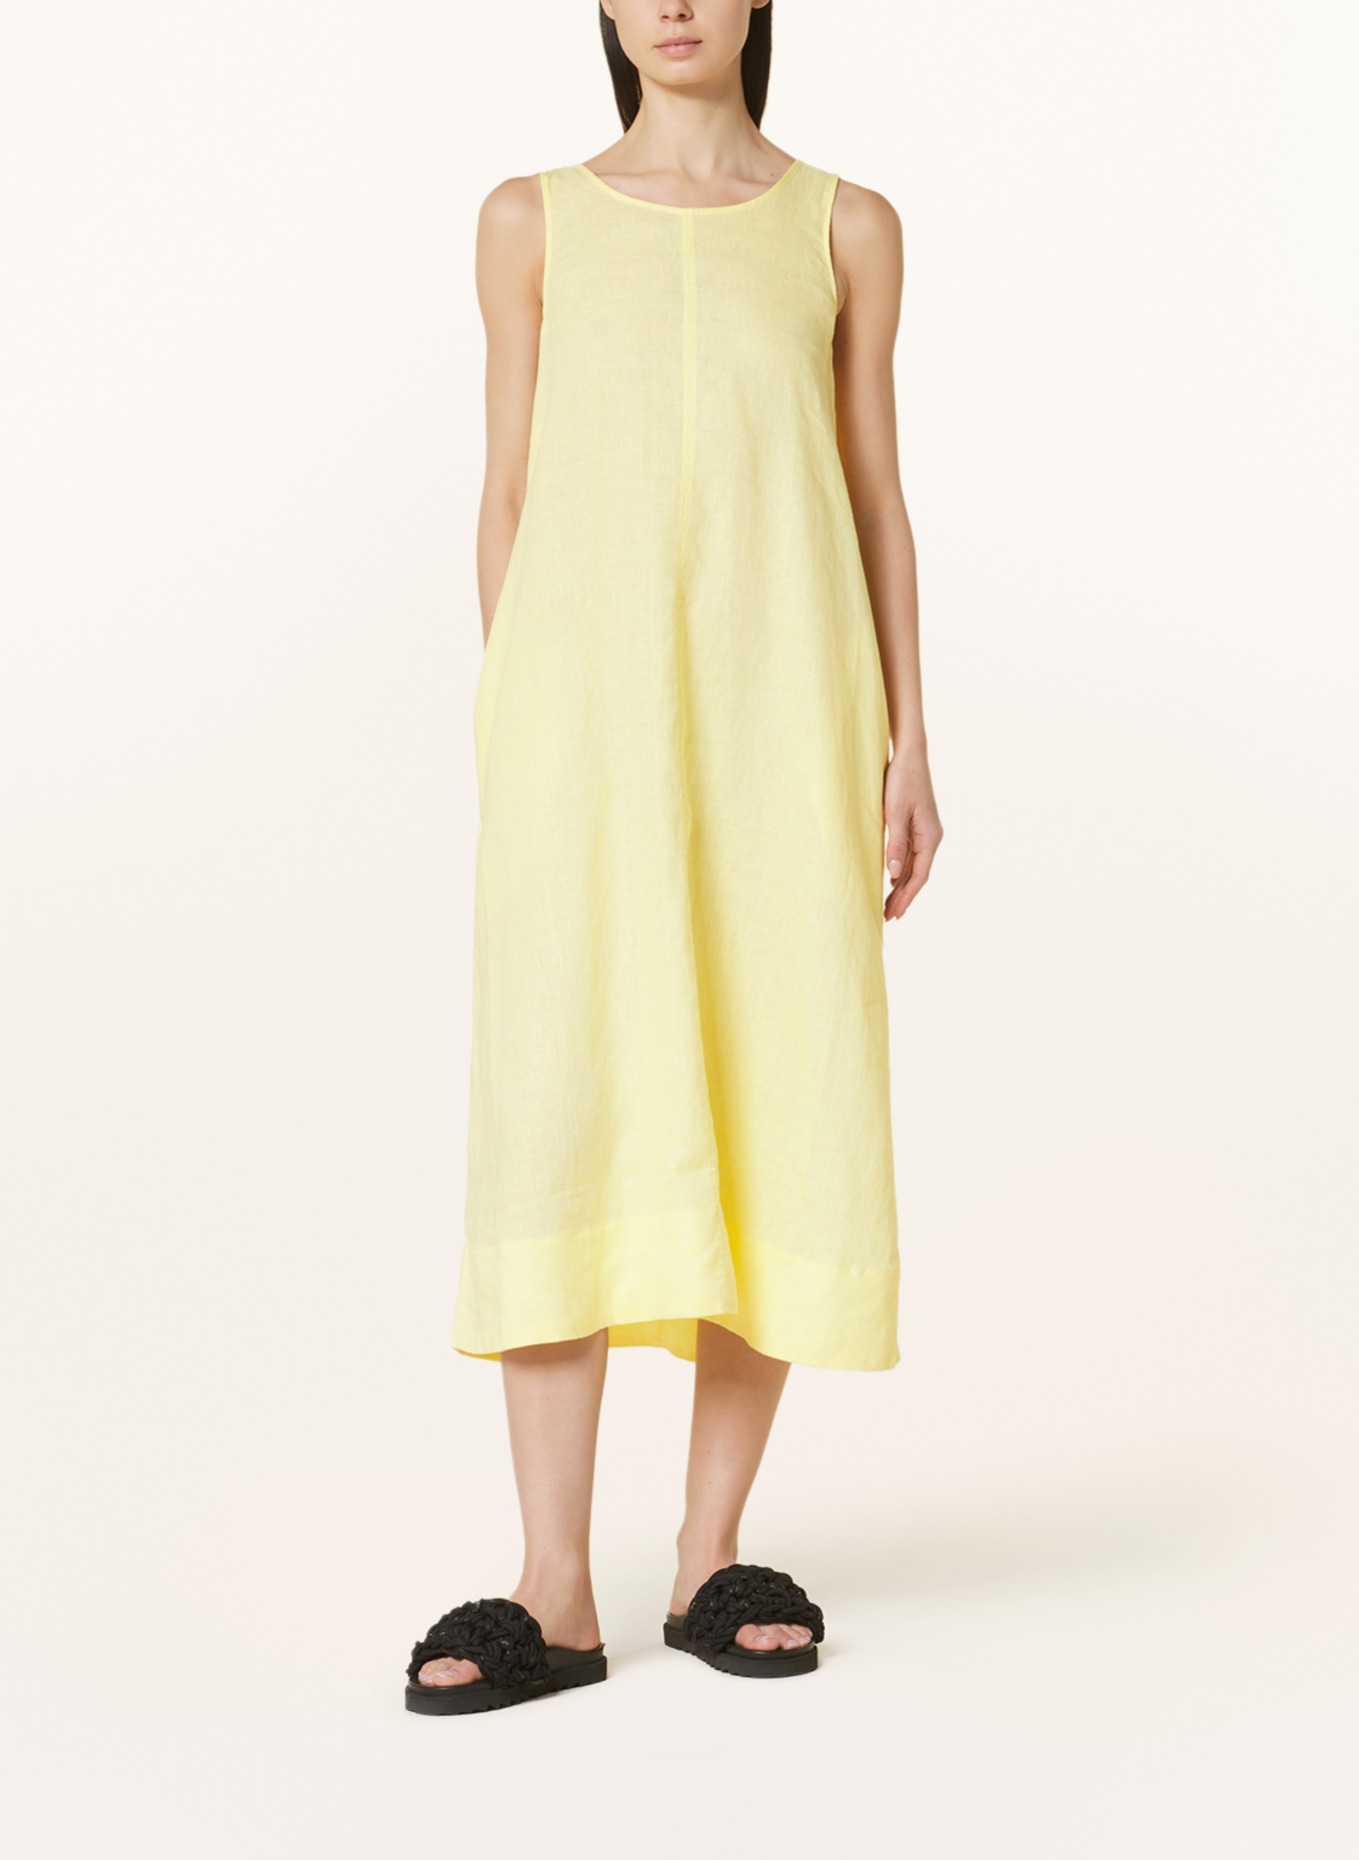 COS Linen dress in yellow